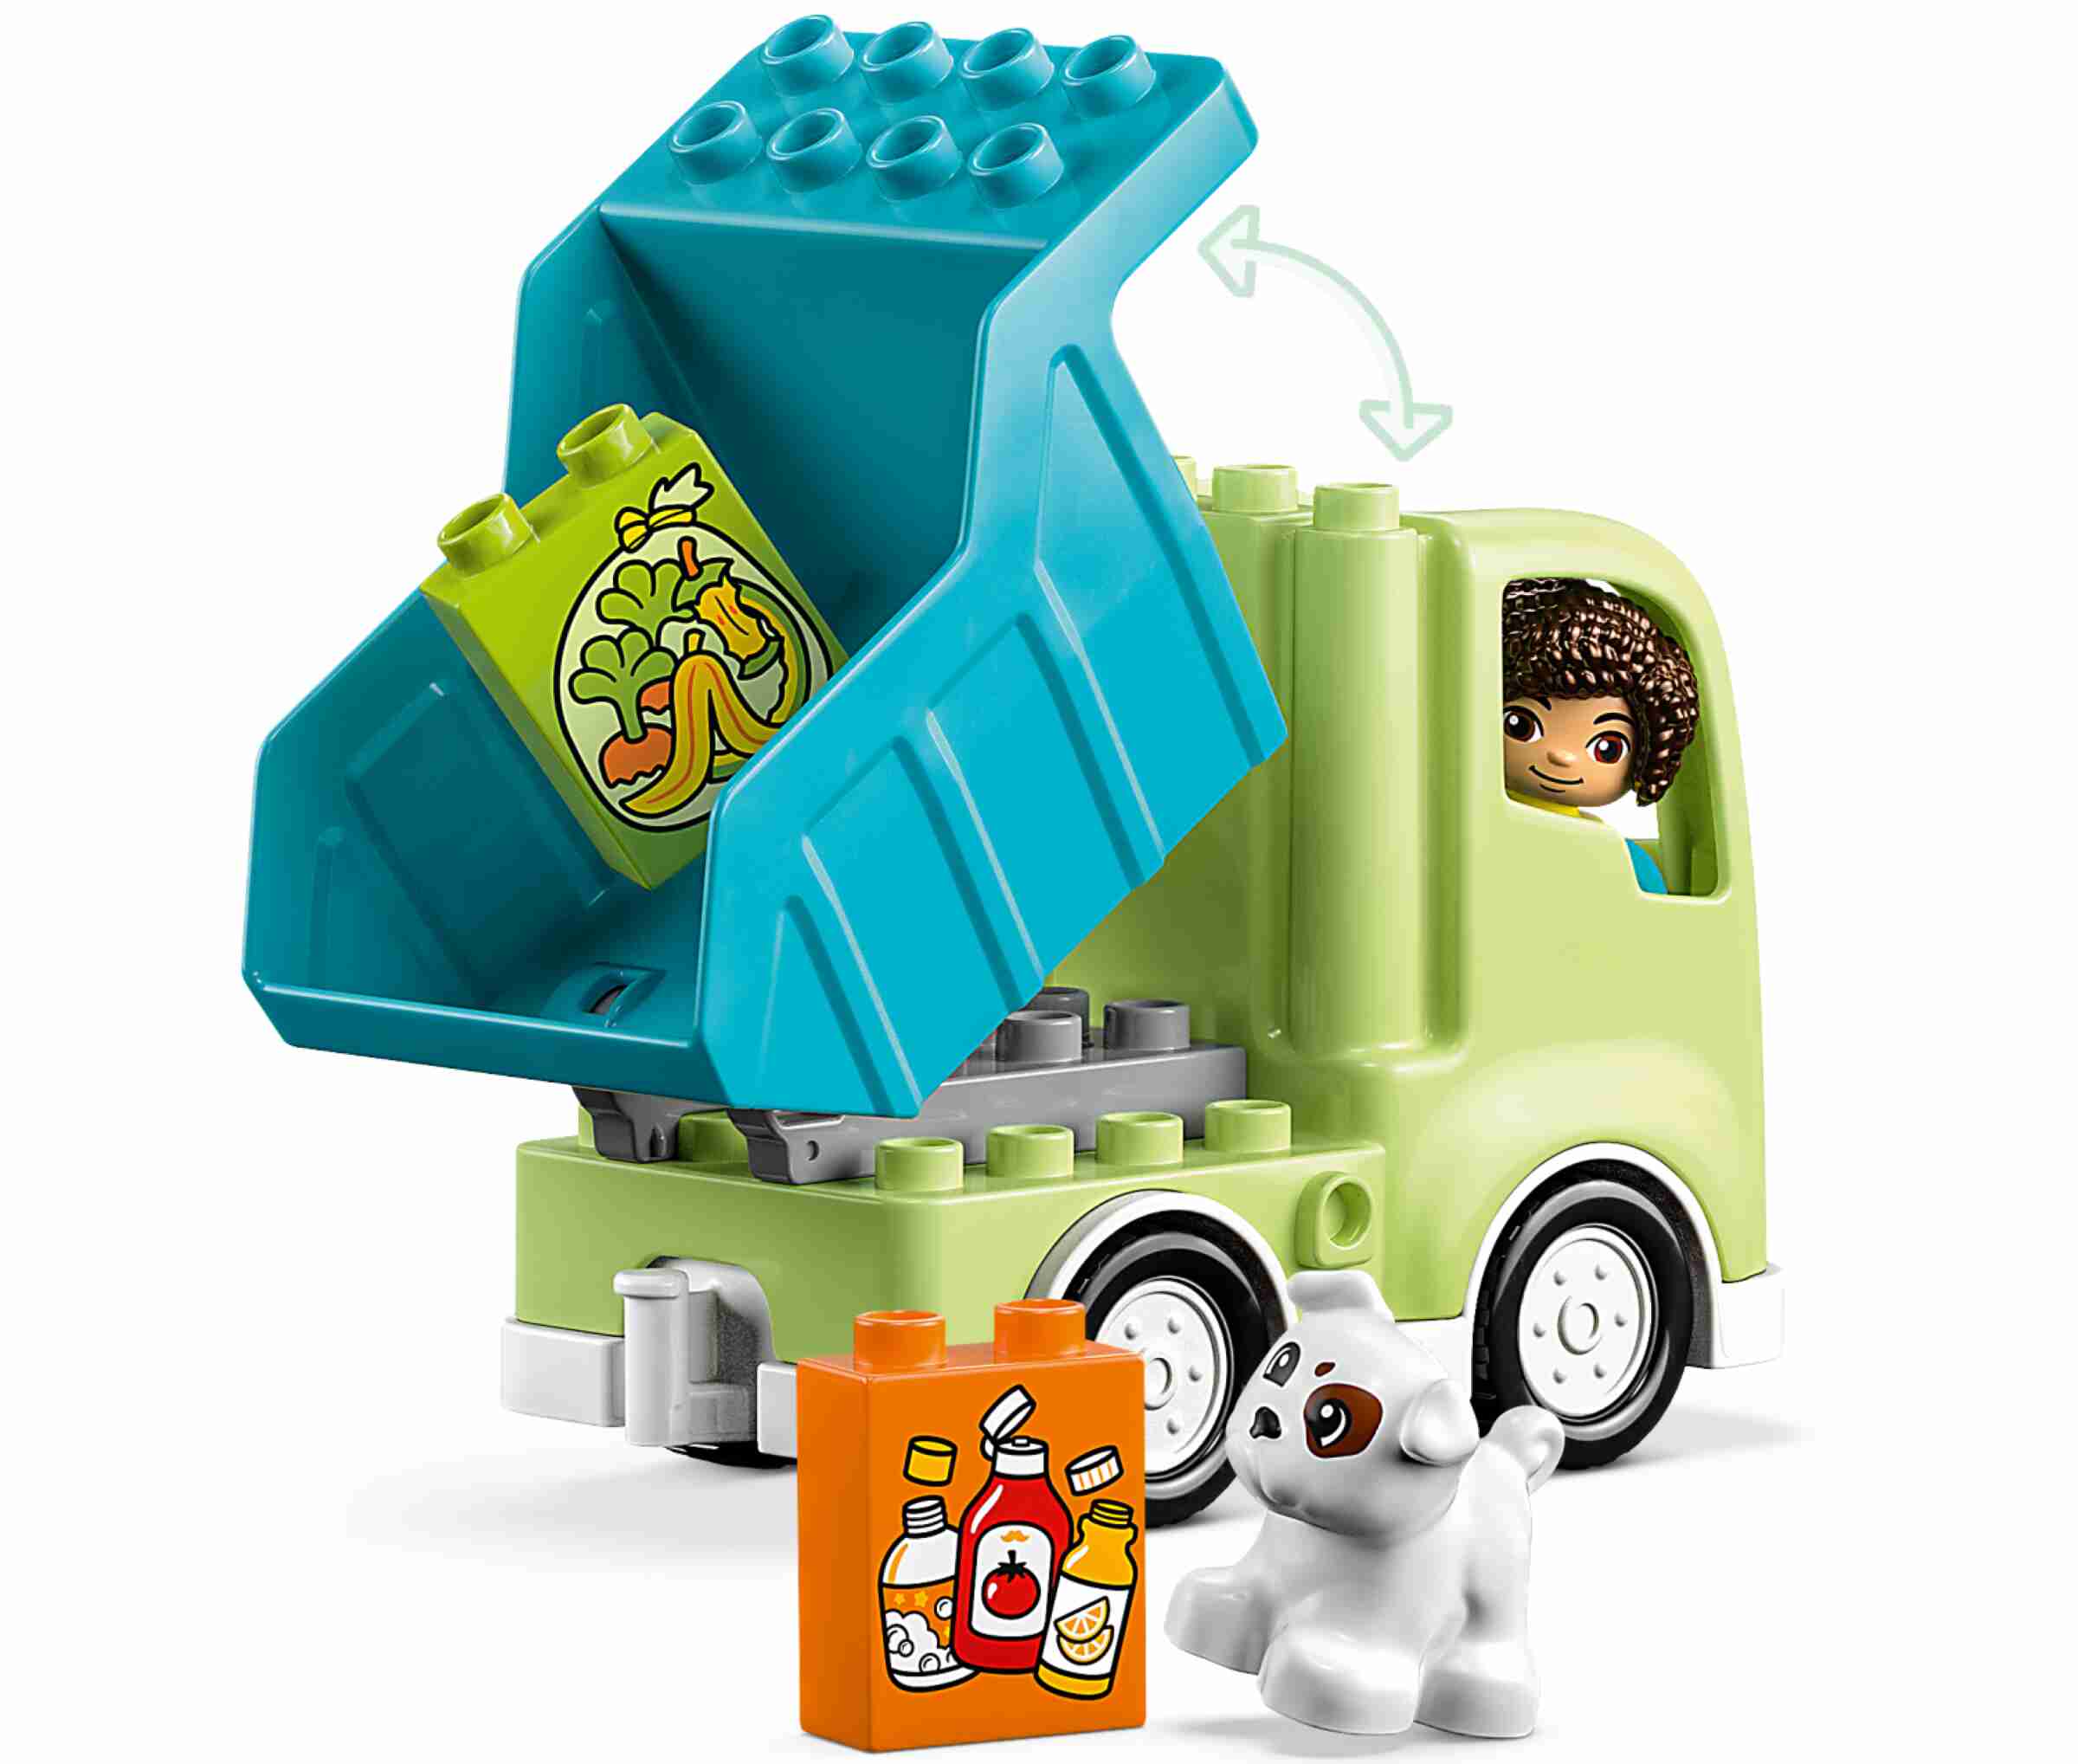 LEGO 10987 DUPLO Recycling-LKW, 3 farbige Mülltonnen, Müllmann